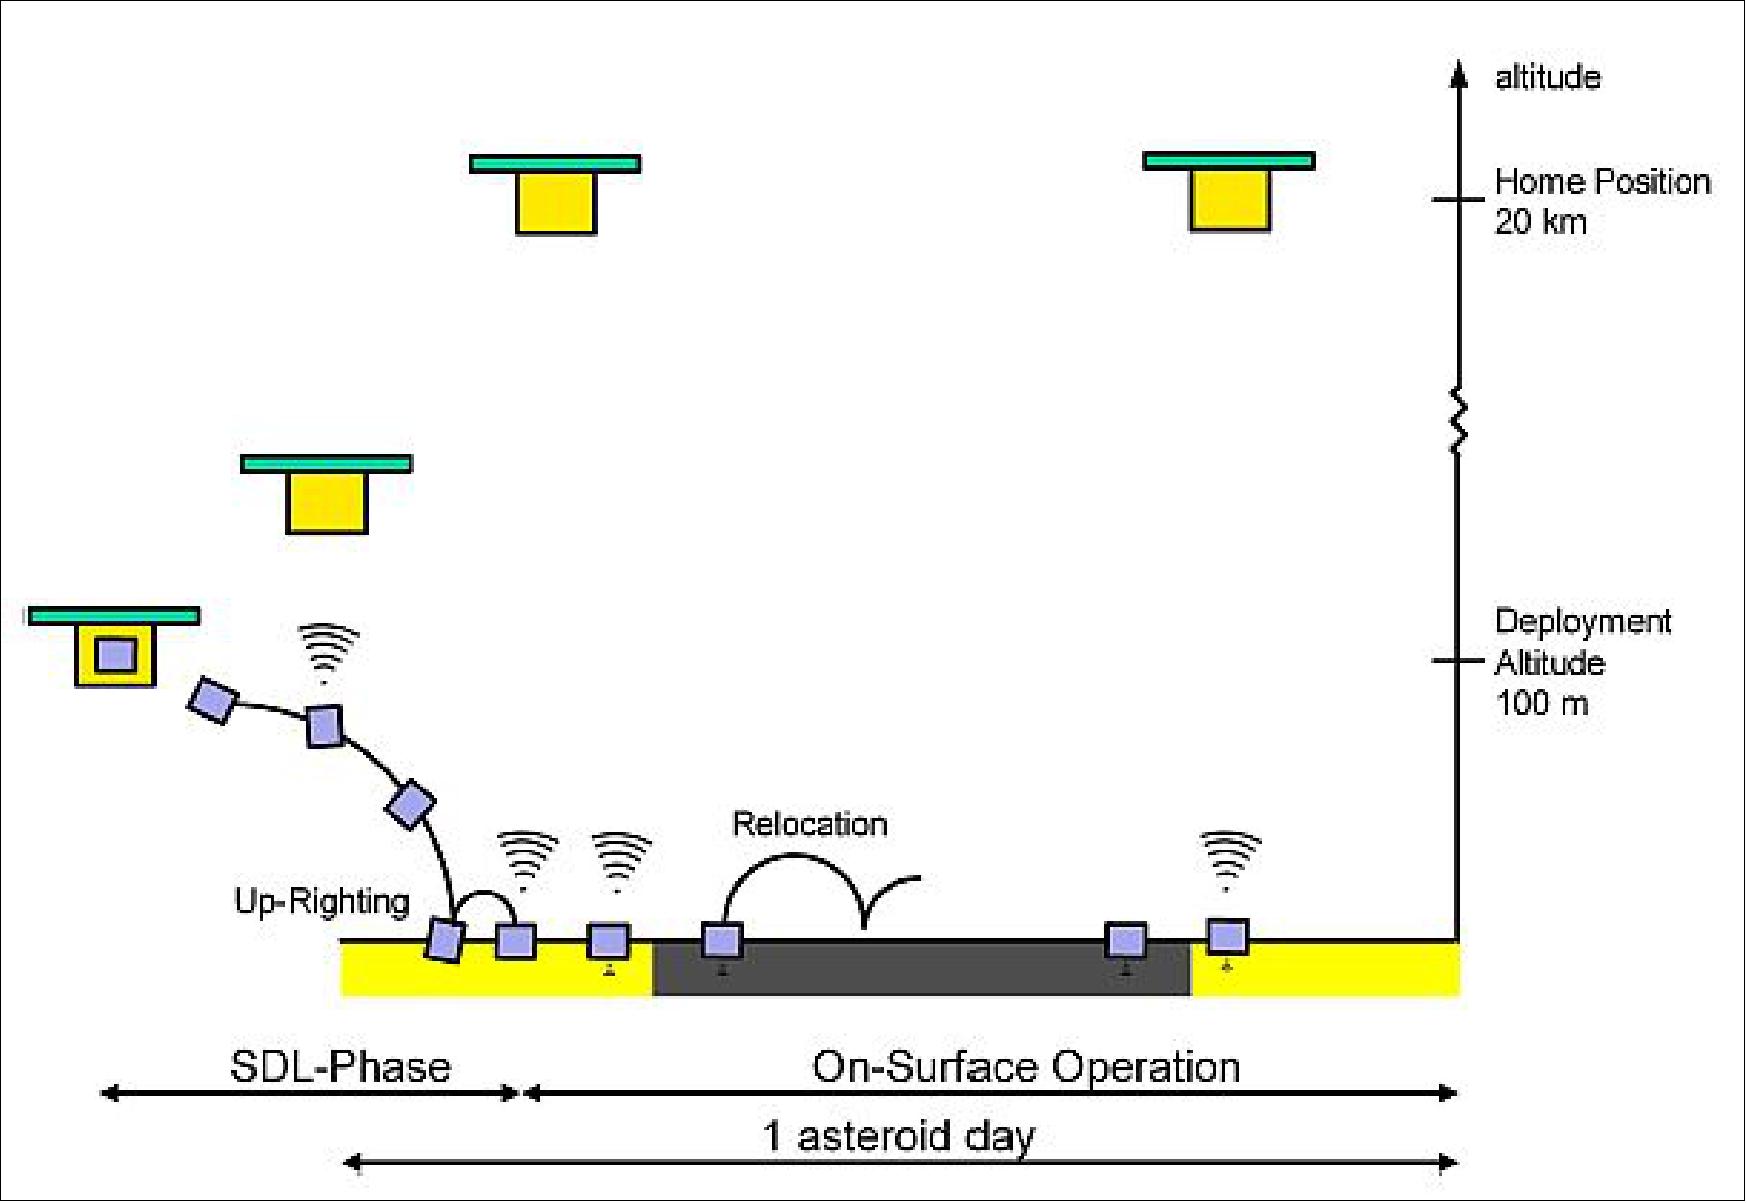 Figure 129: Sketch of separation & surface operation concept (image credit: DLR)